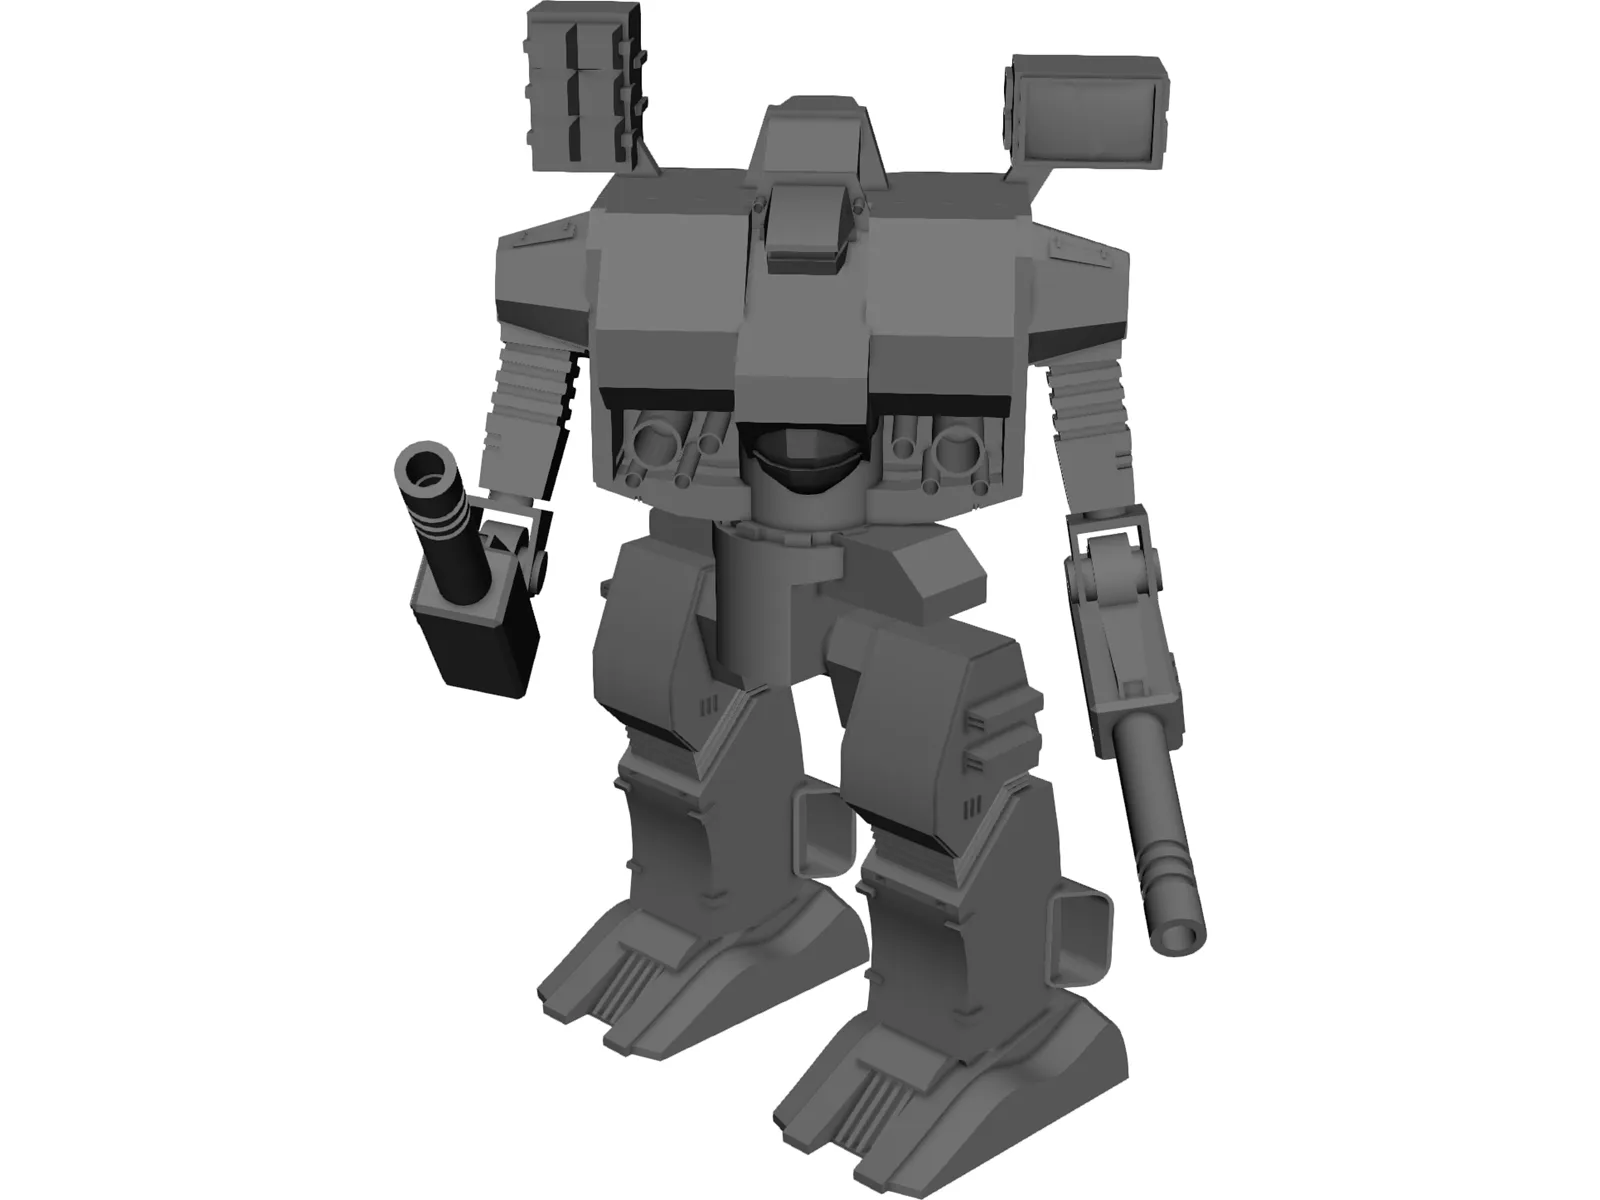 Warhammer 3D Model